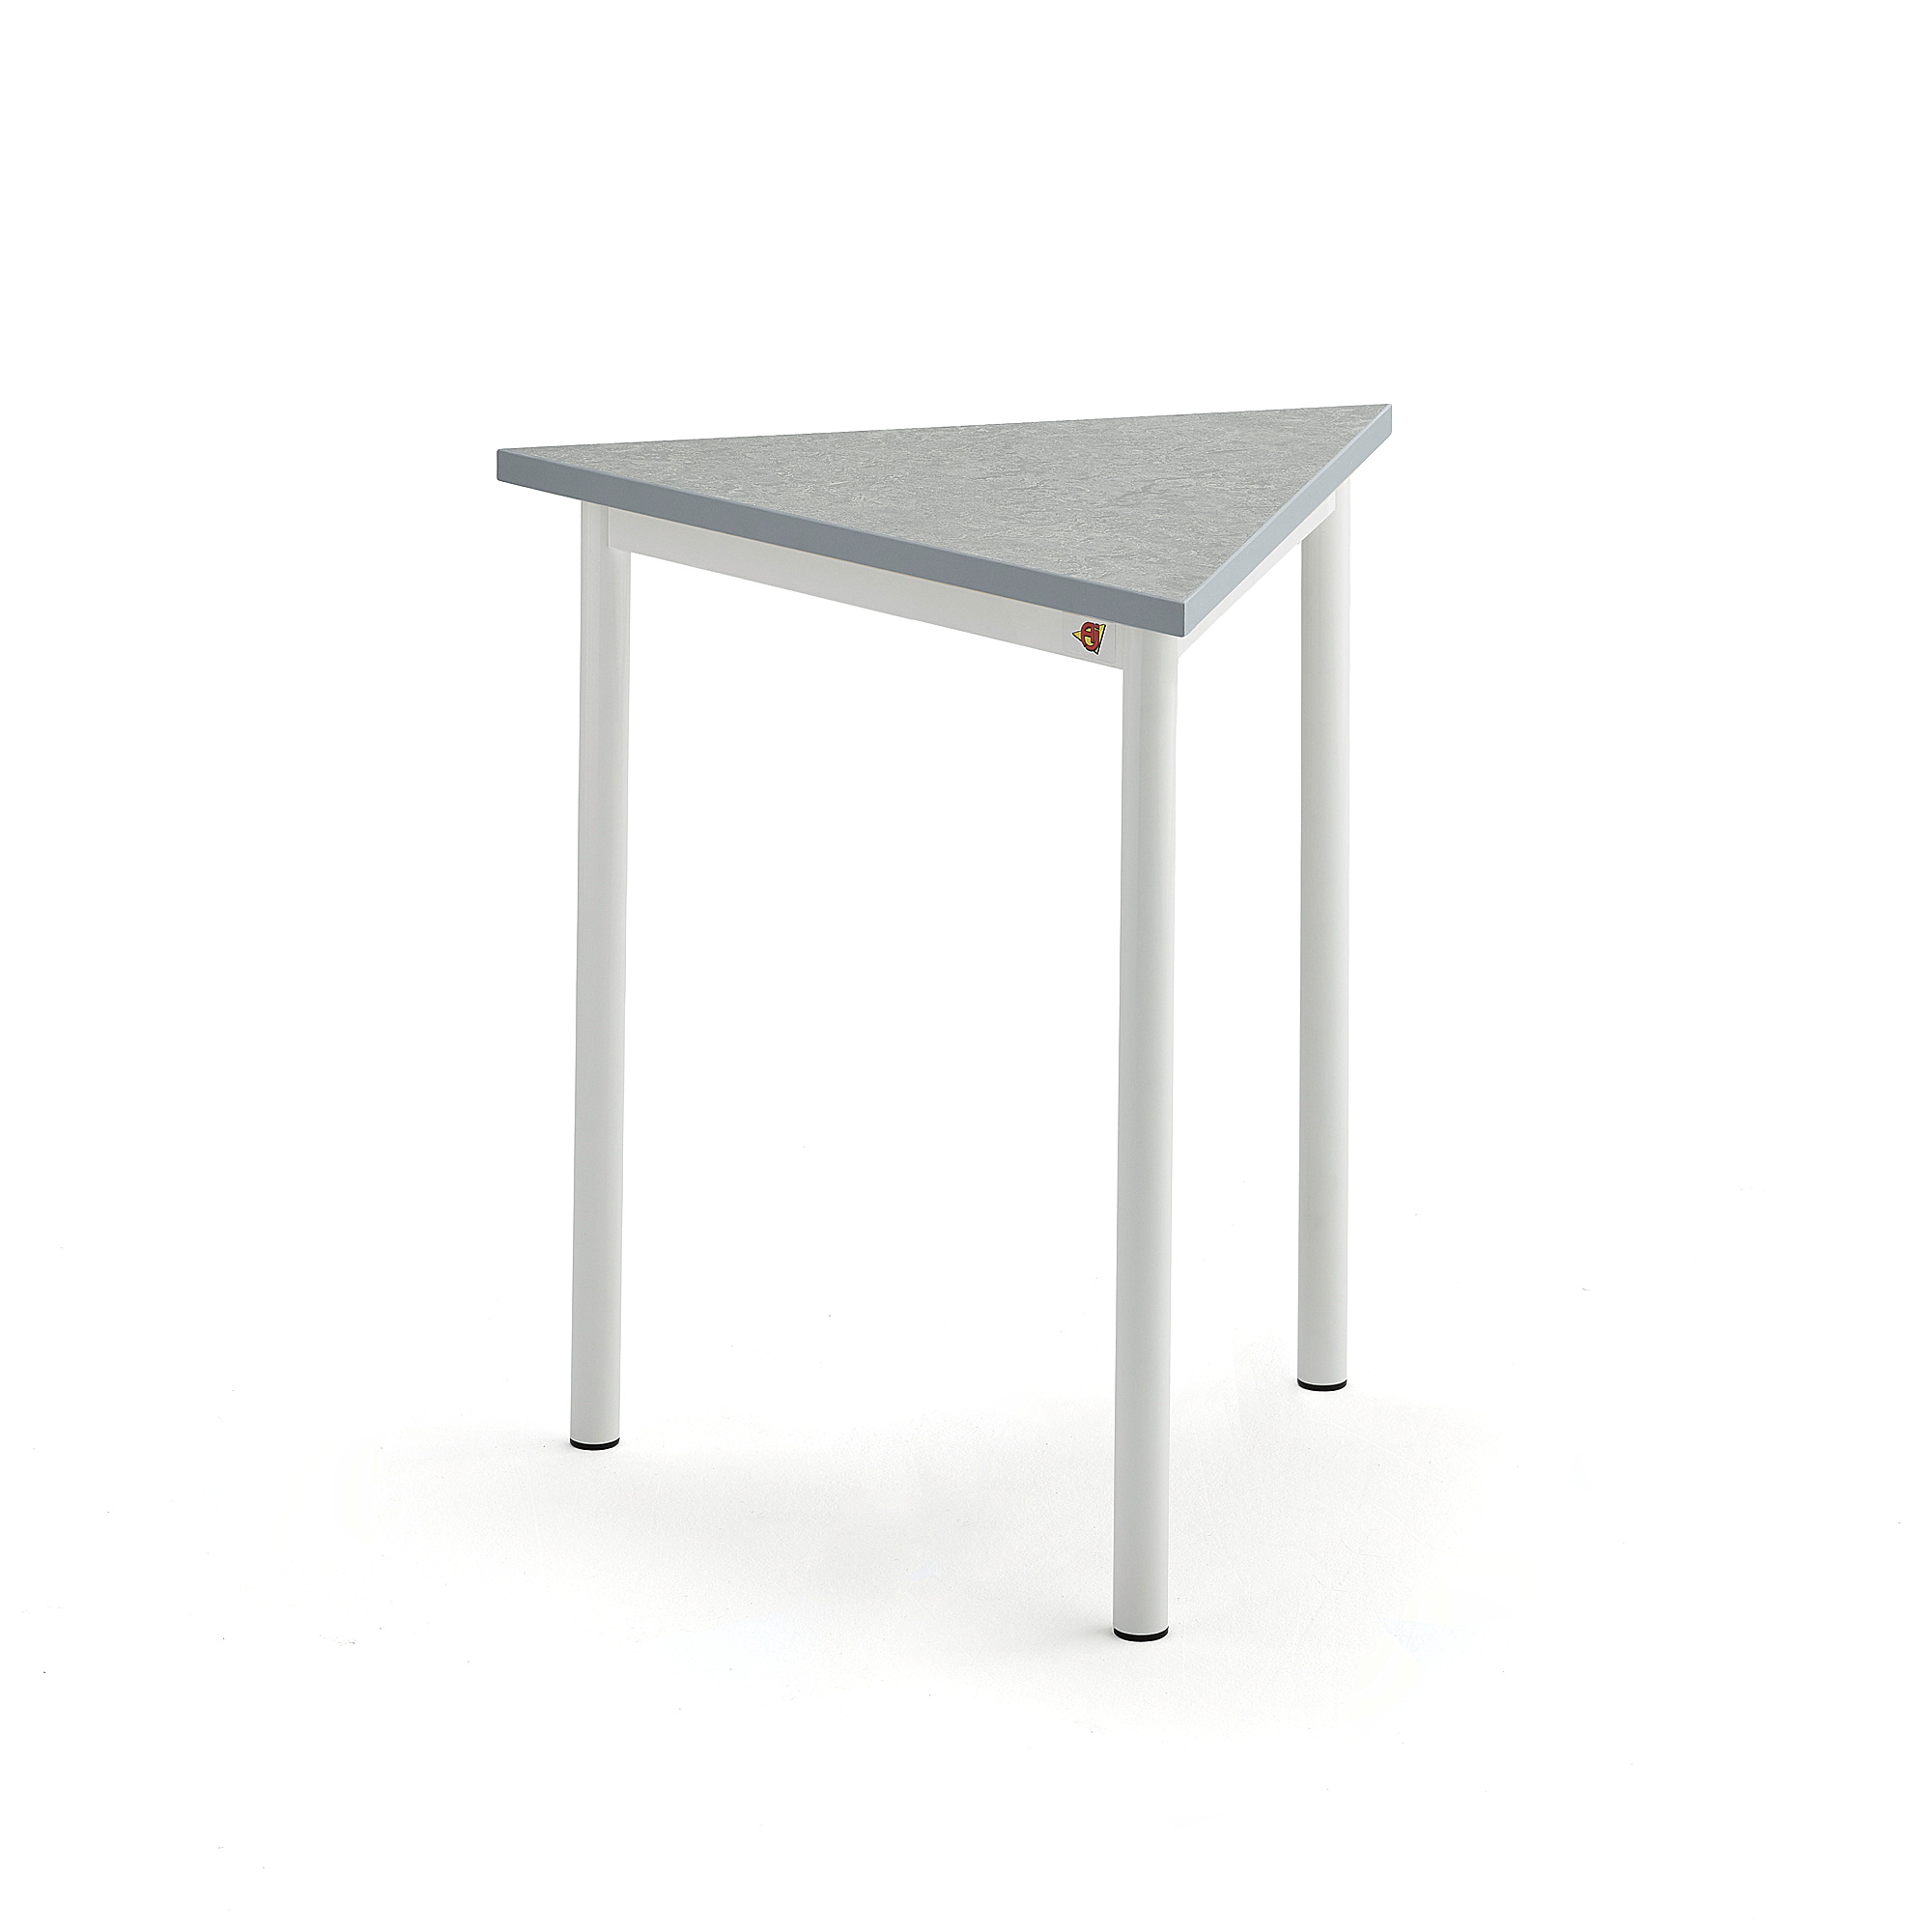 Stůl SONITUS TRIANGEL, 700x700x720 mm, bílé nohy, deska s linoleem, šedá